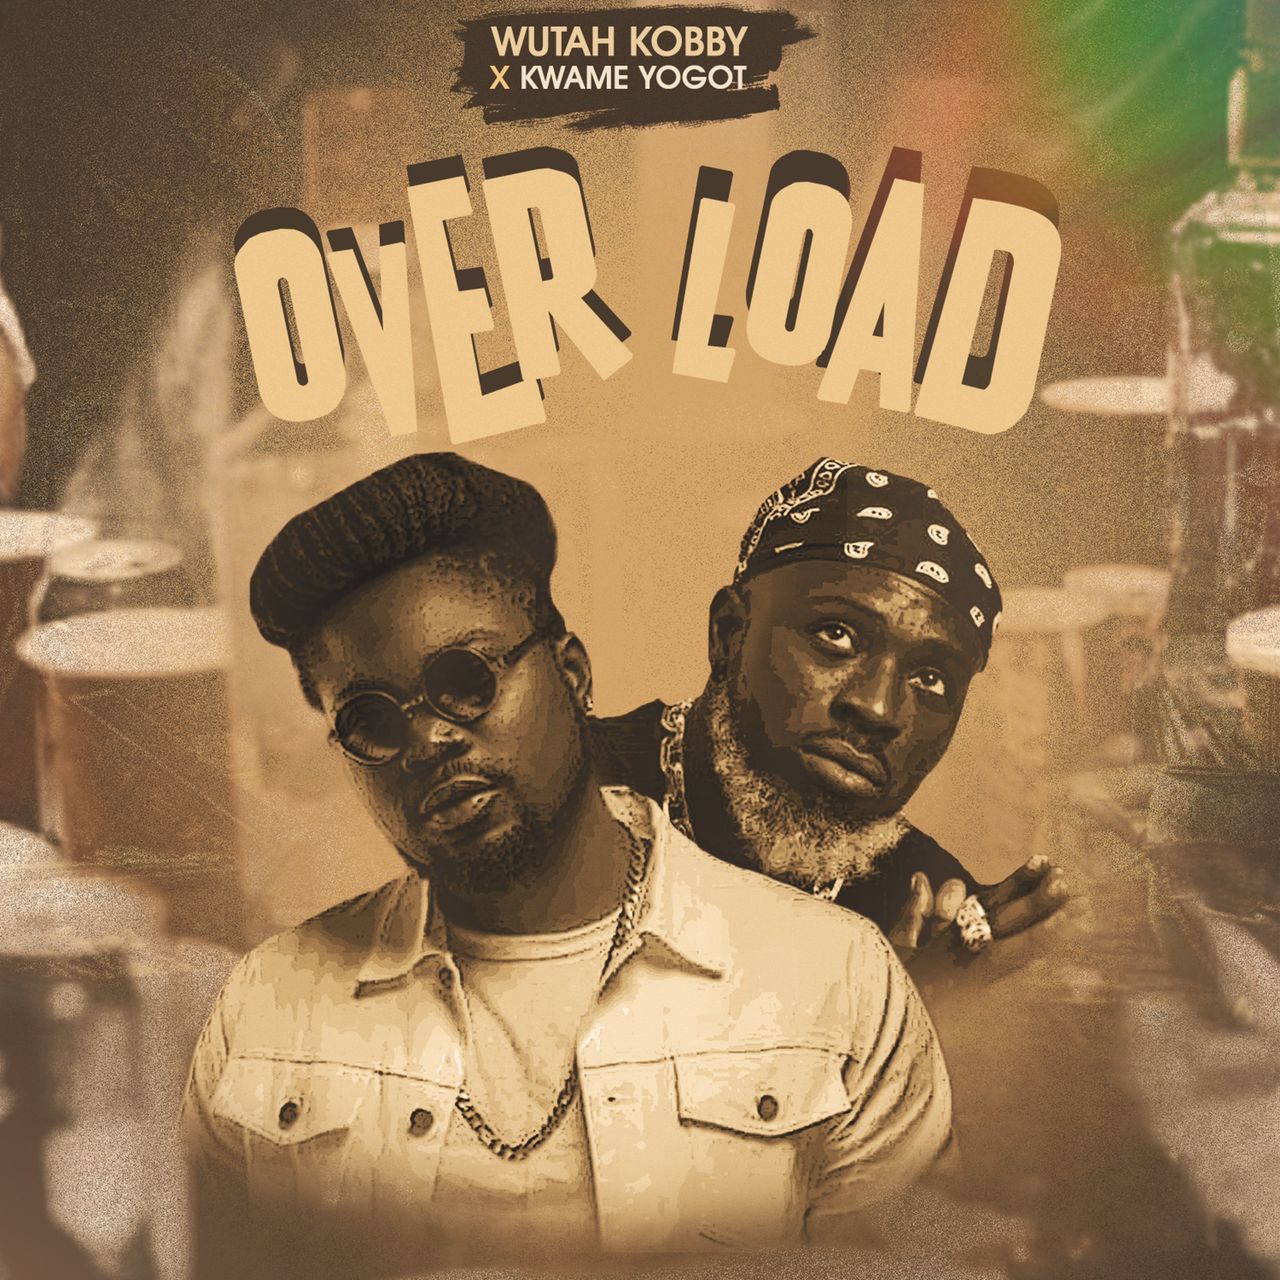 Wutah Kobby - Overload Ft. Kwame Yogot